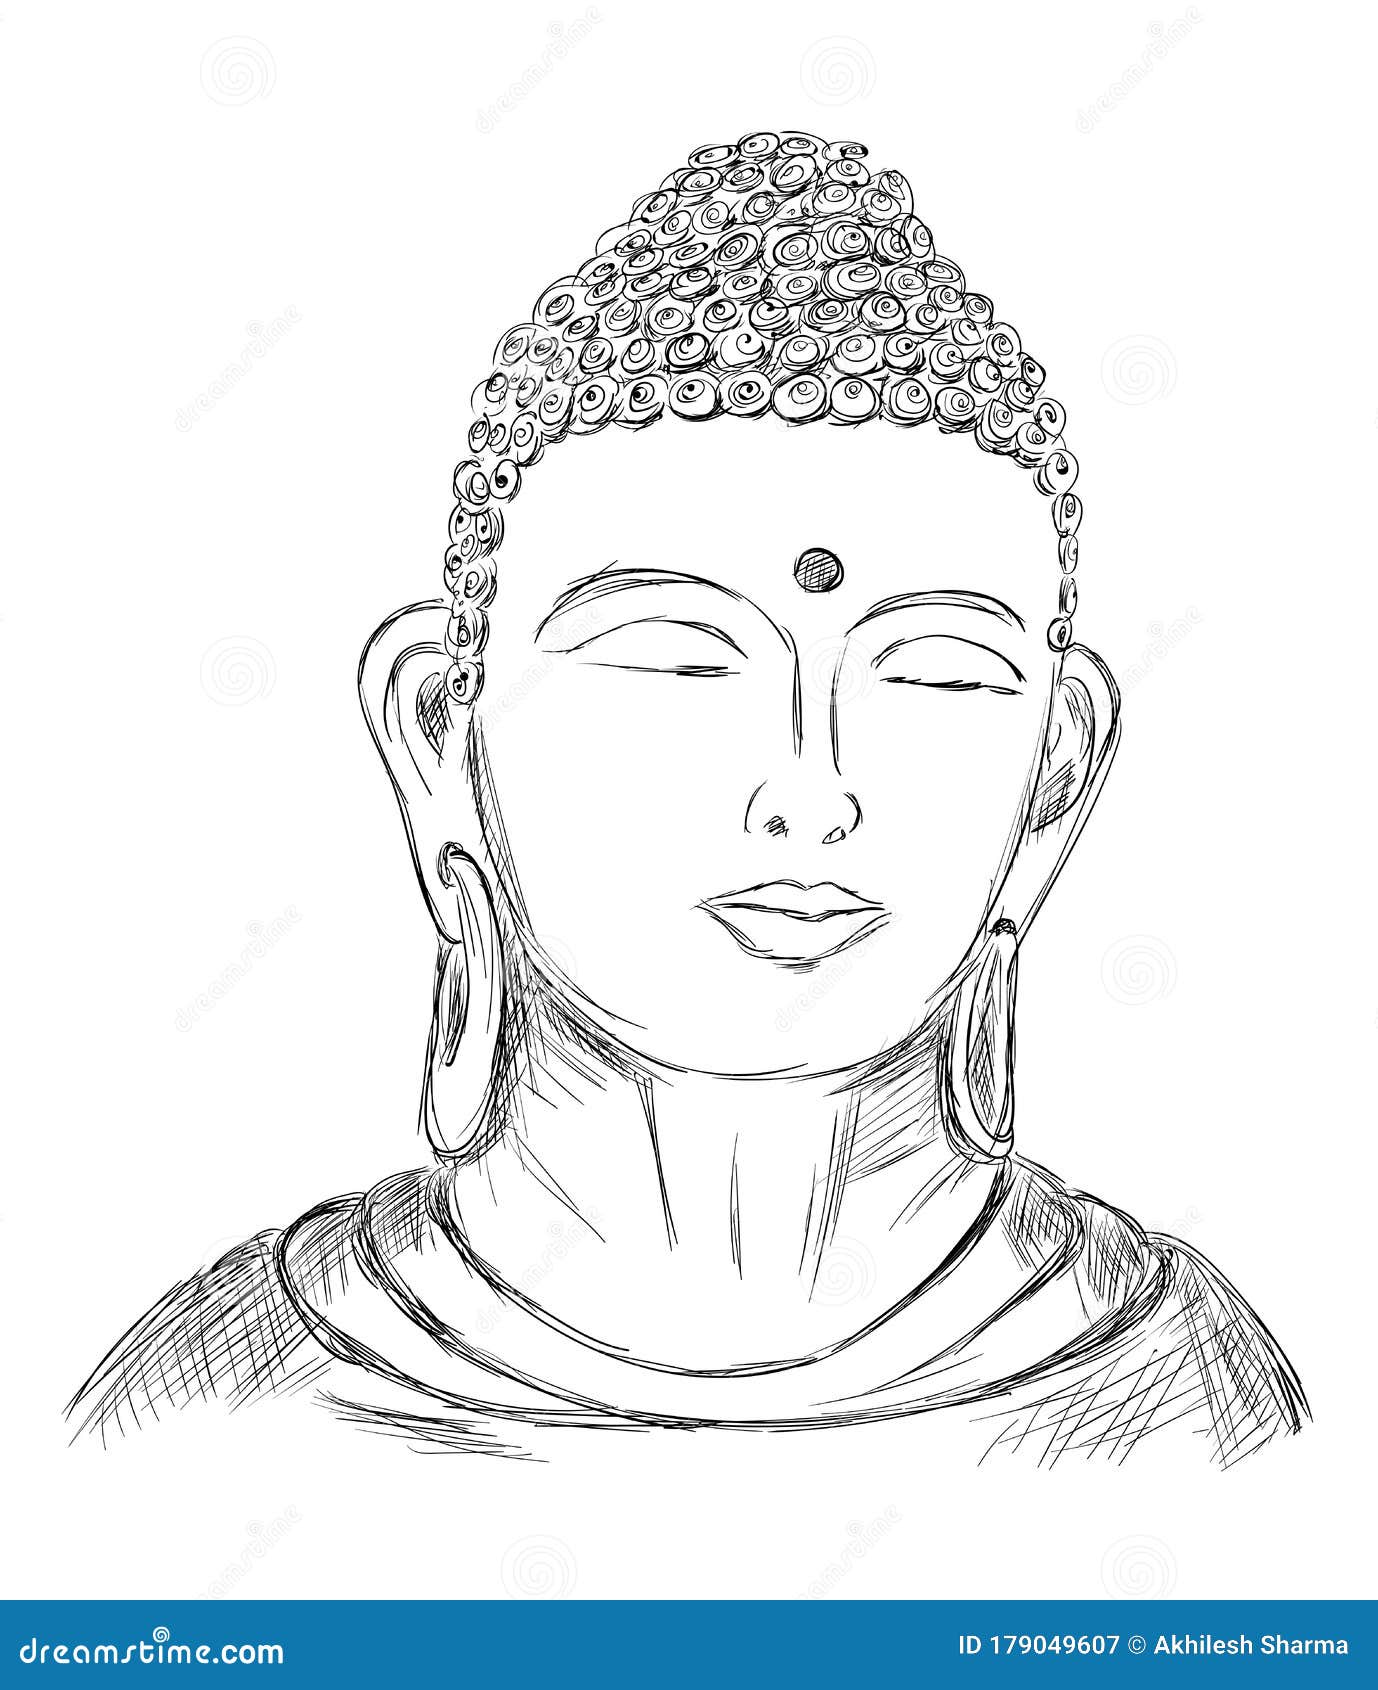 buddha pencil art Drawing by madura venkatachalam | Saatchi Art